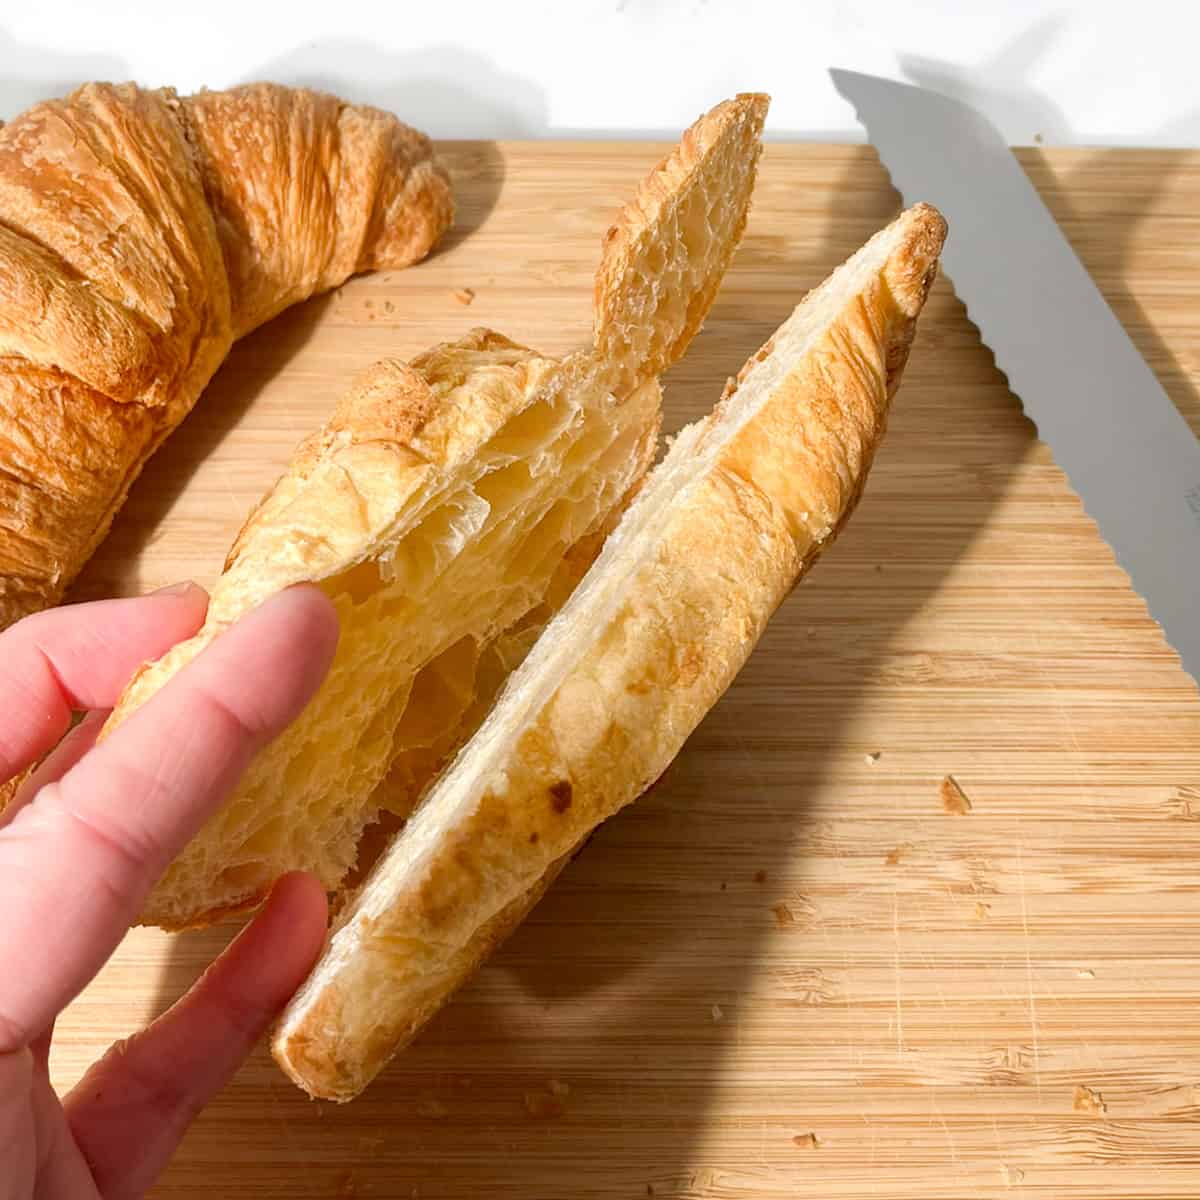 Slicing the croissant half way through.